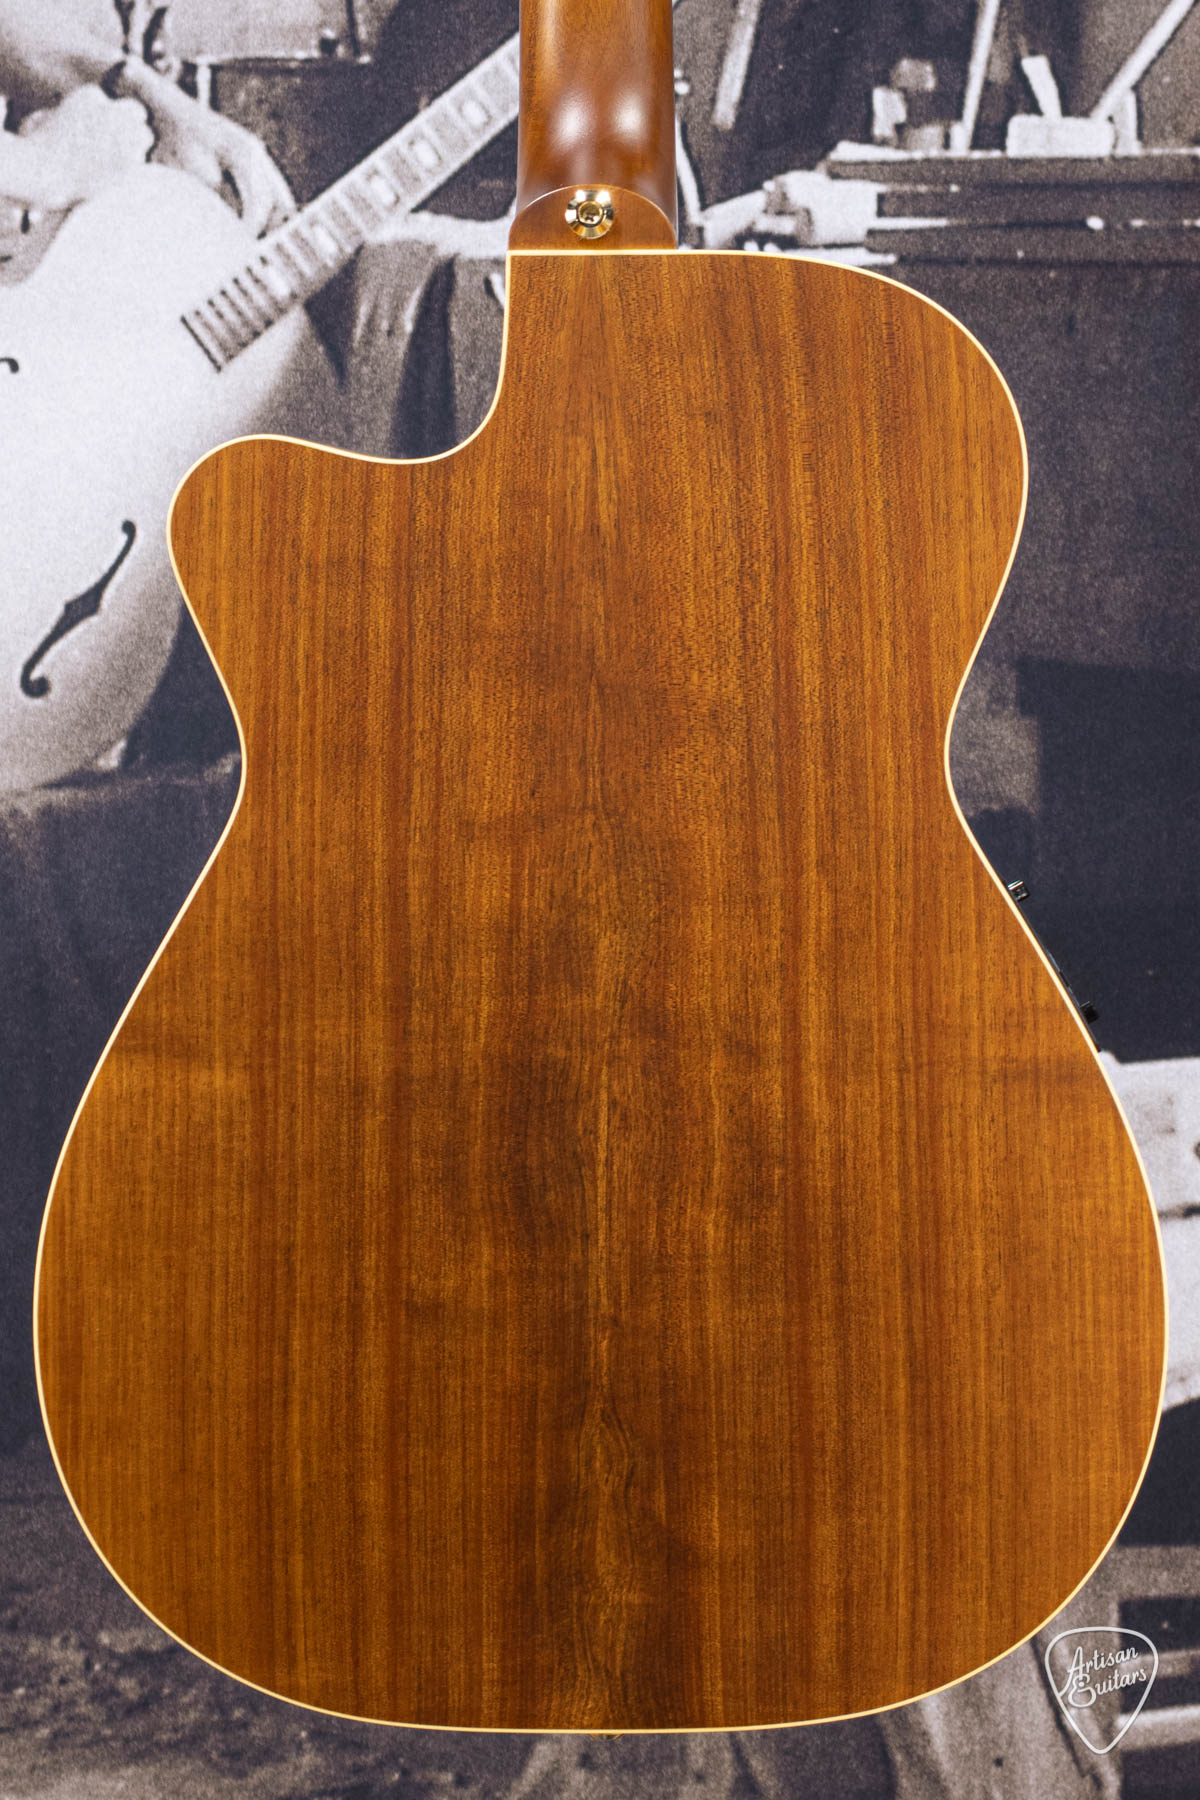 Maton Guitars EBG-808C Nashville Cutaway - 16358